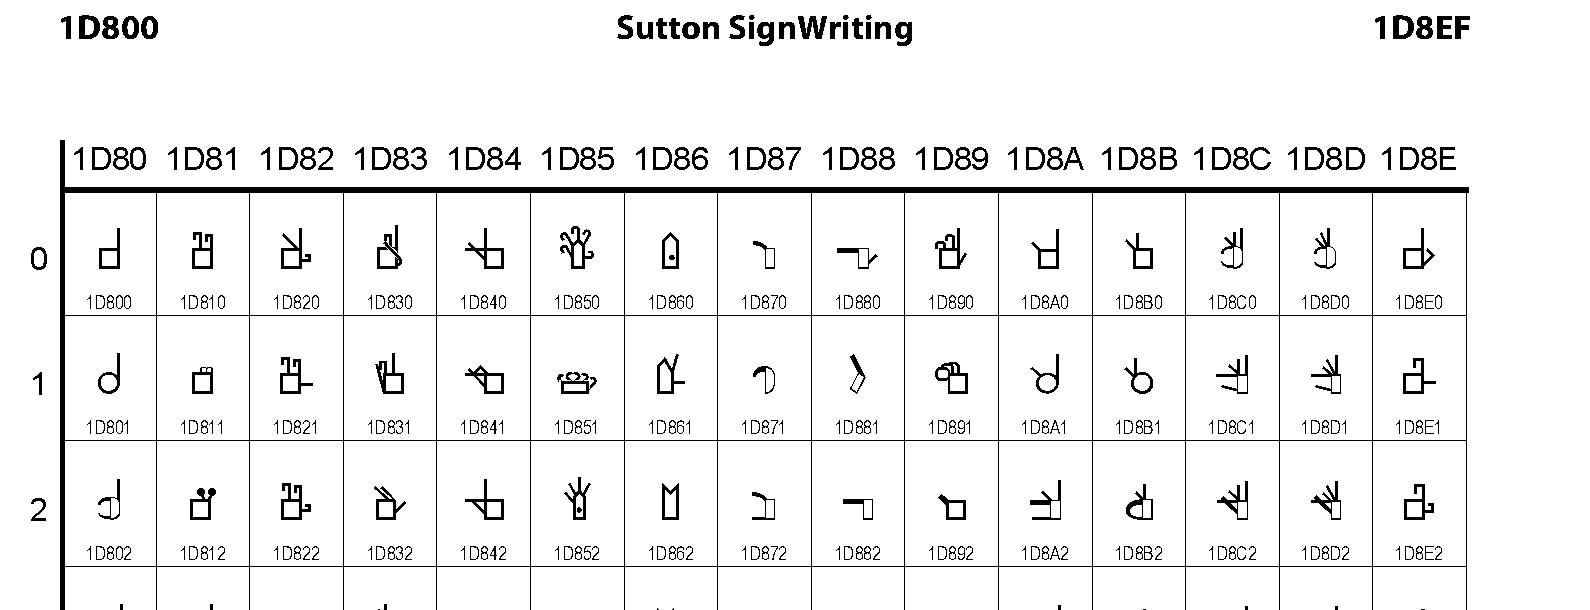 Unicode - Sutton SignWriting